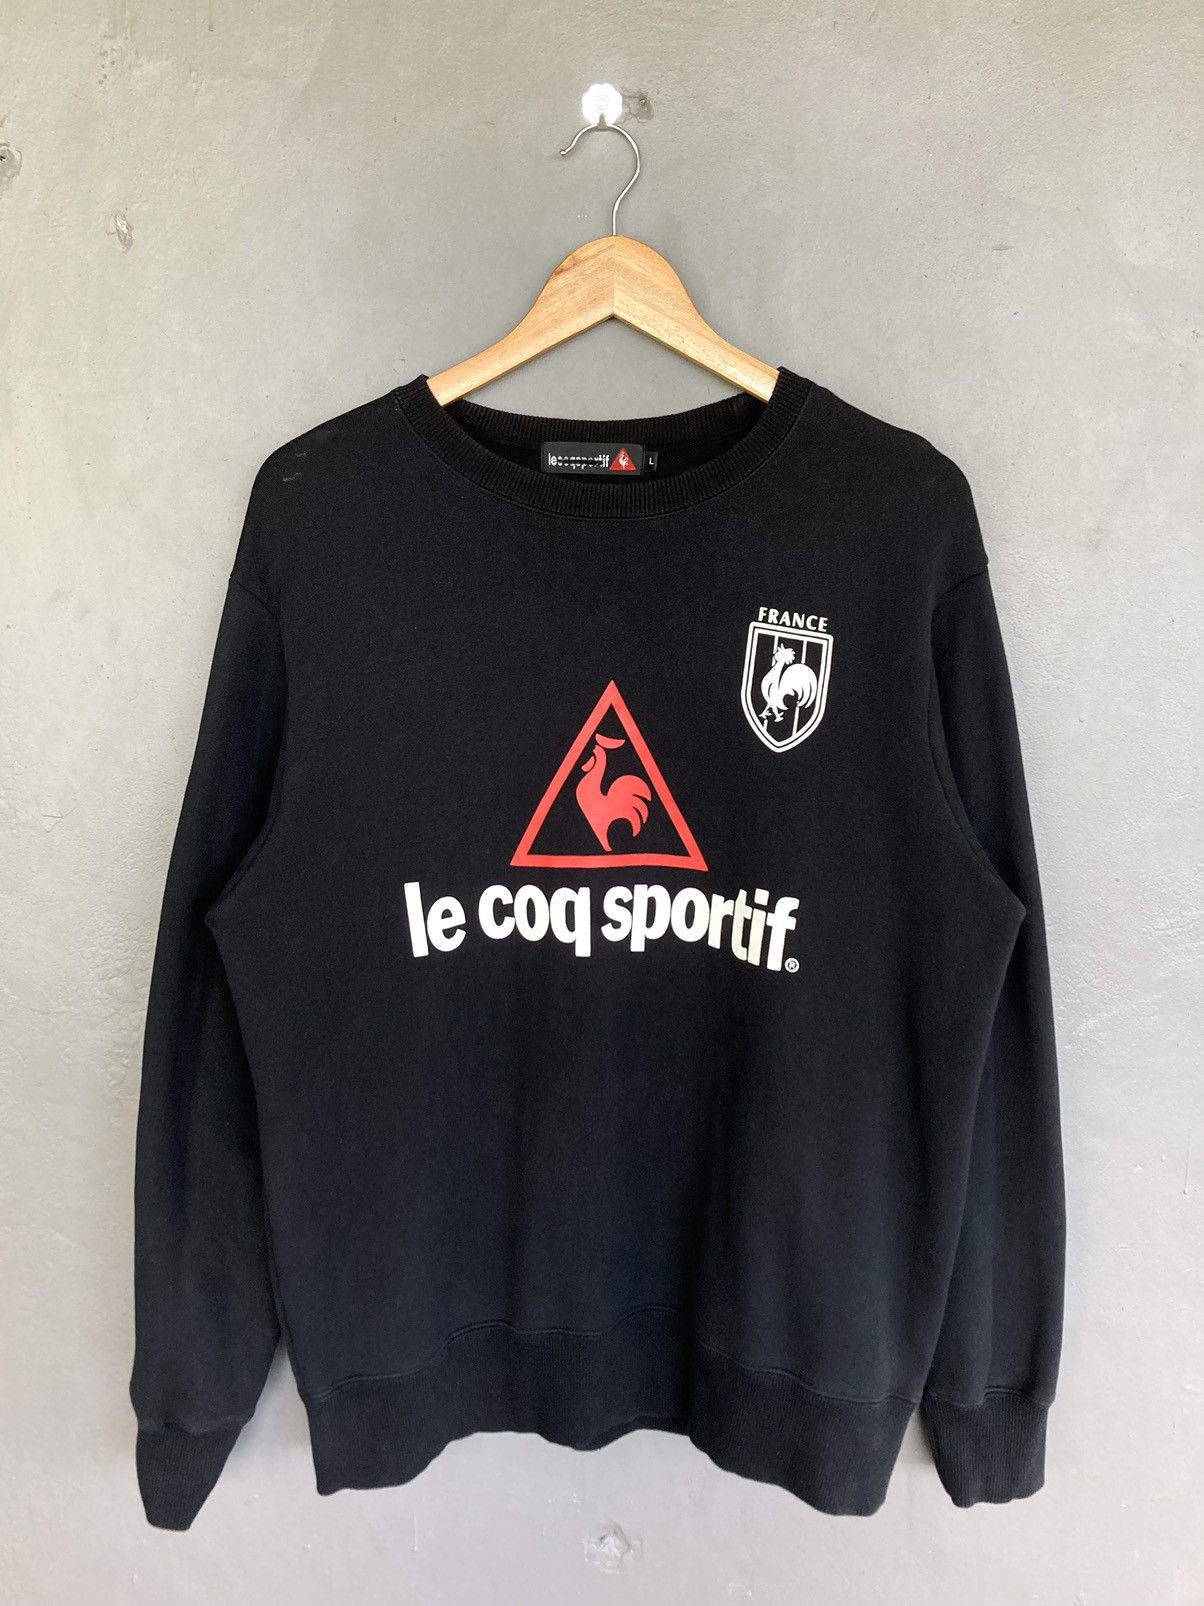 Vintage Le Coq Sportif France Sweatshirt - 1